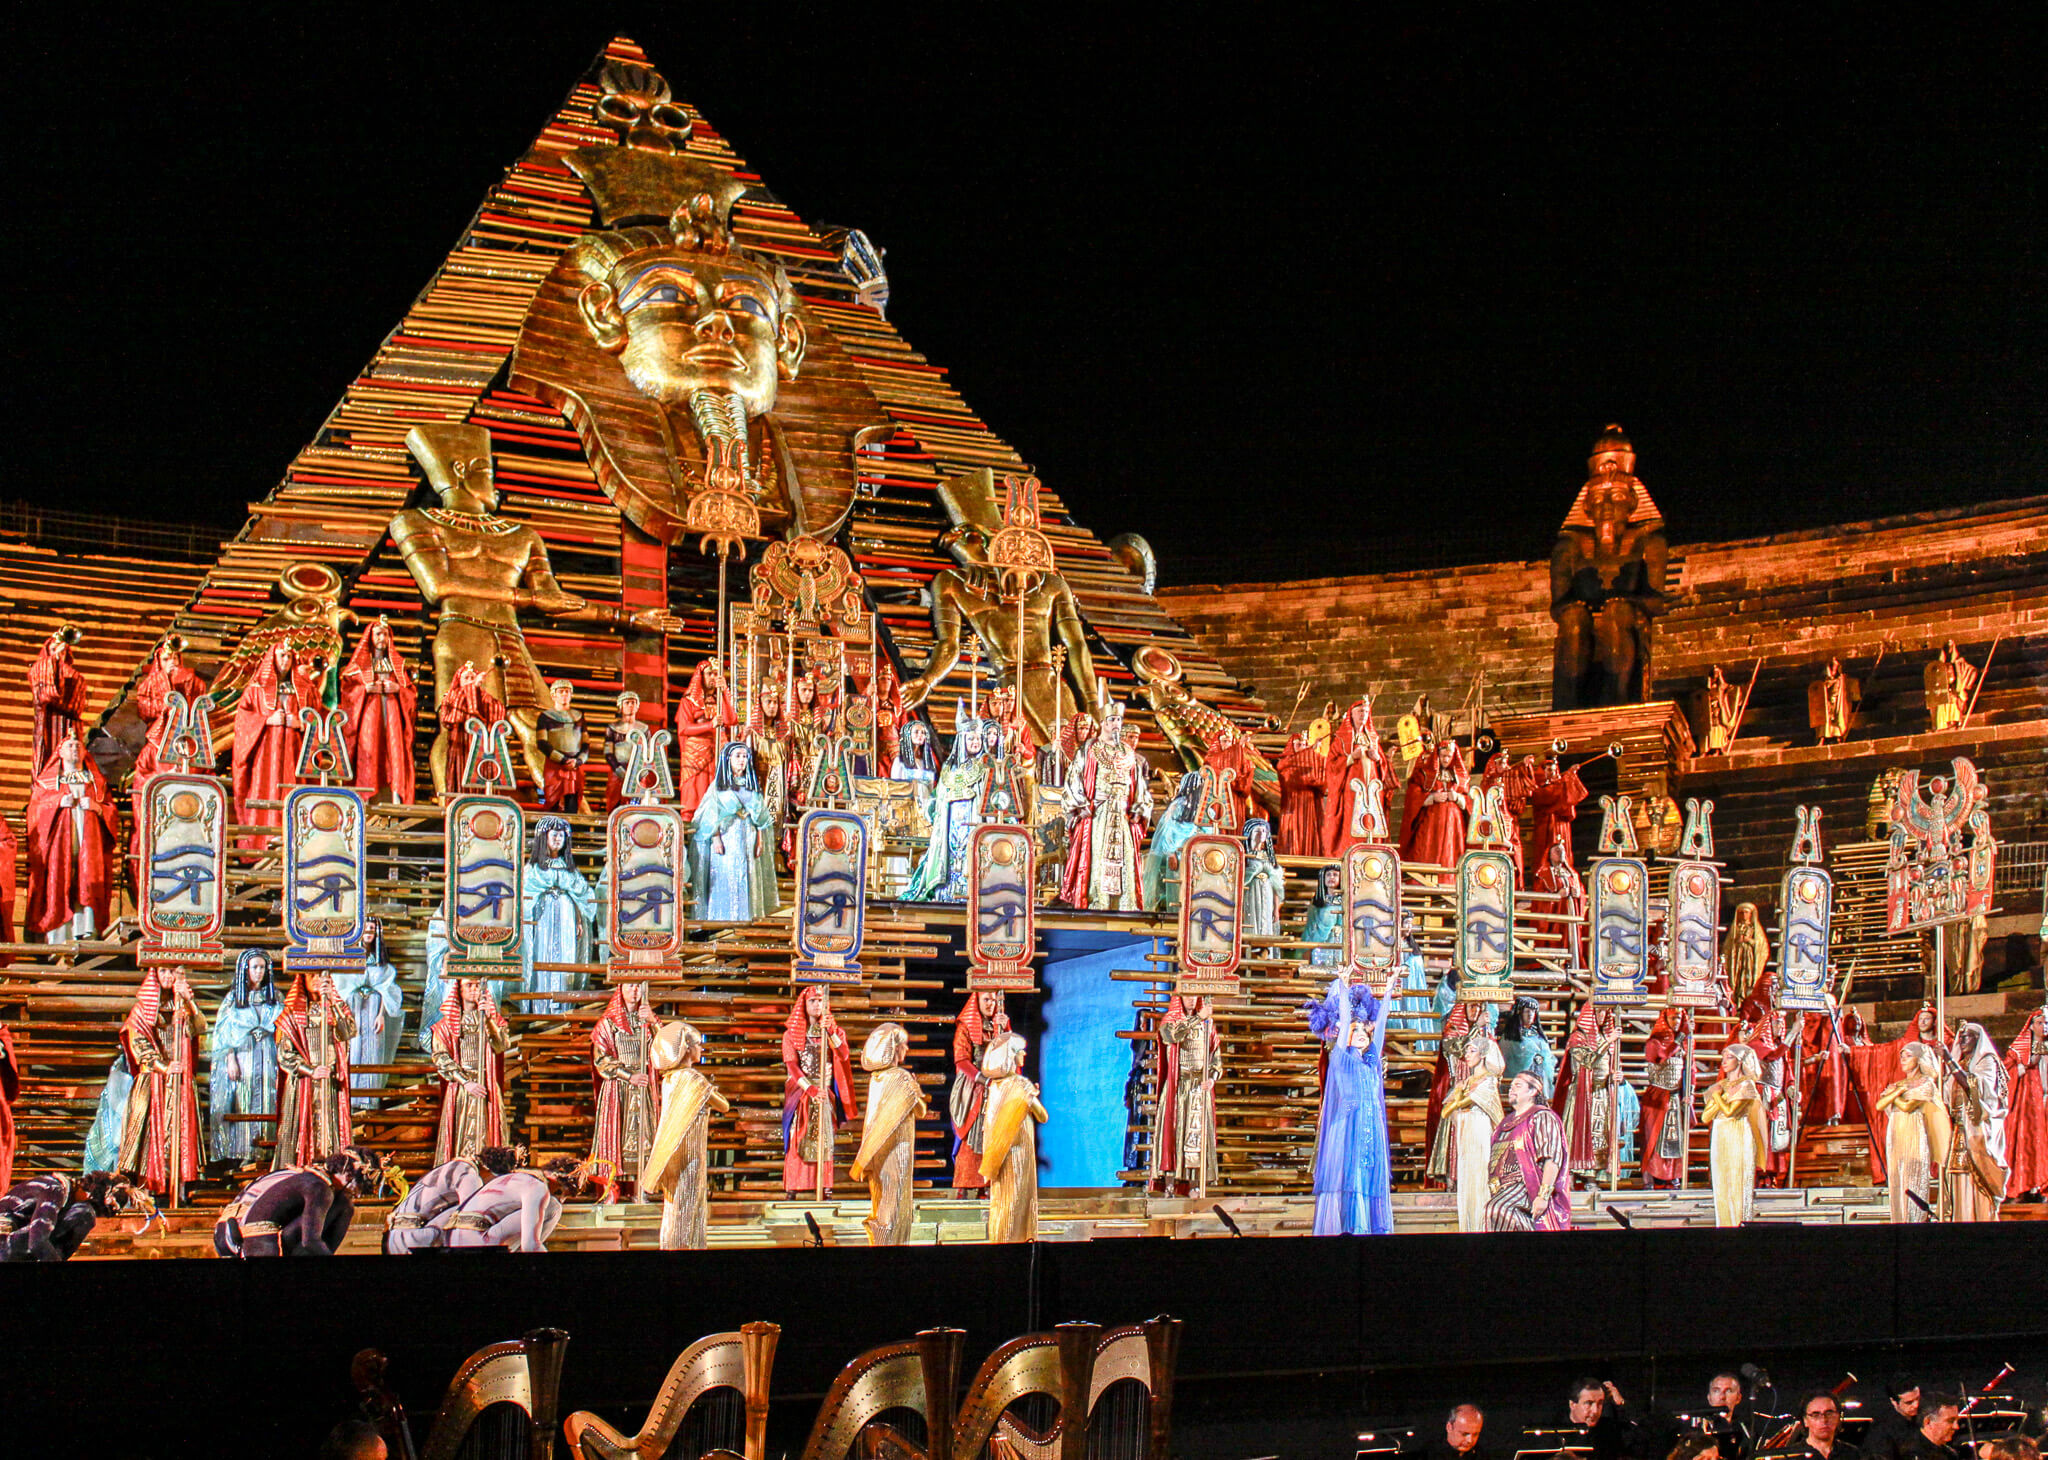 Performance of Aida at the Verona Arena